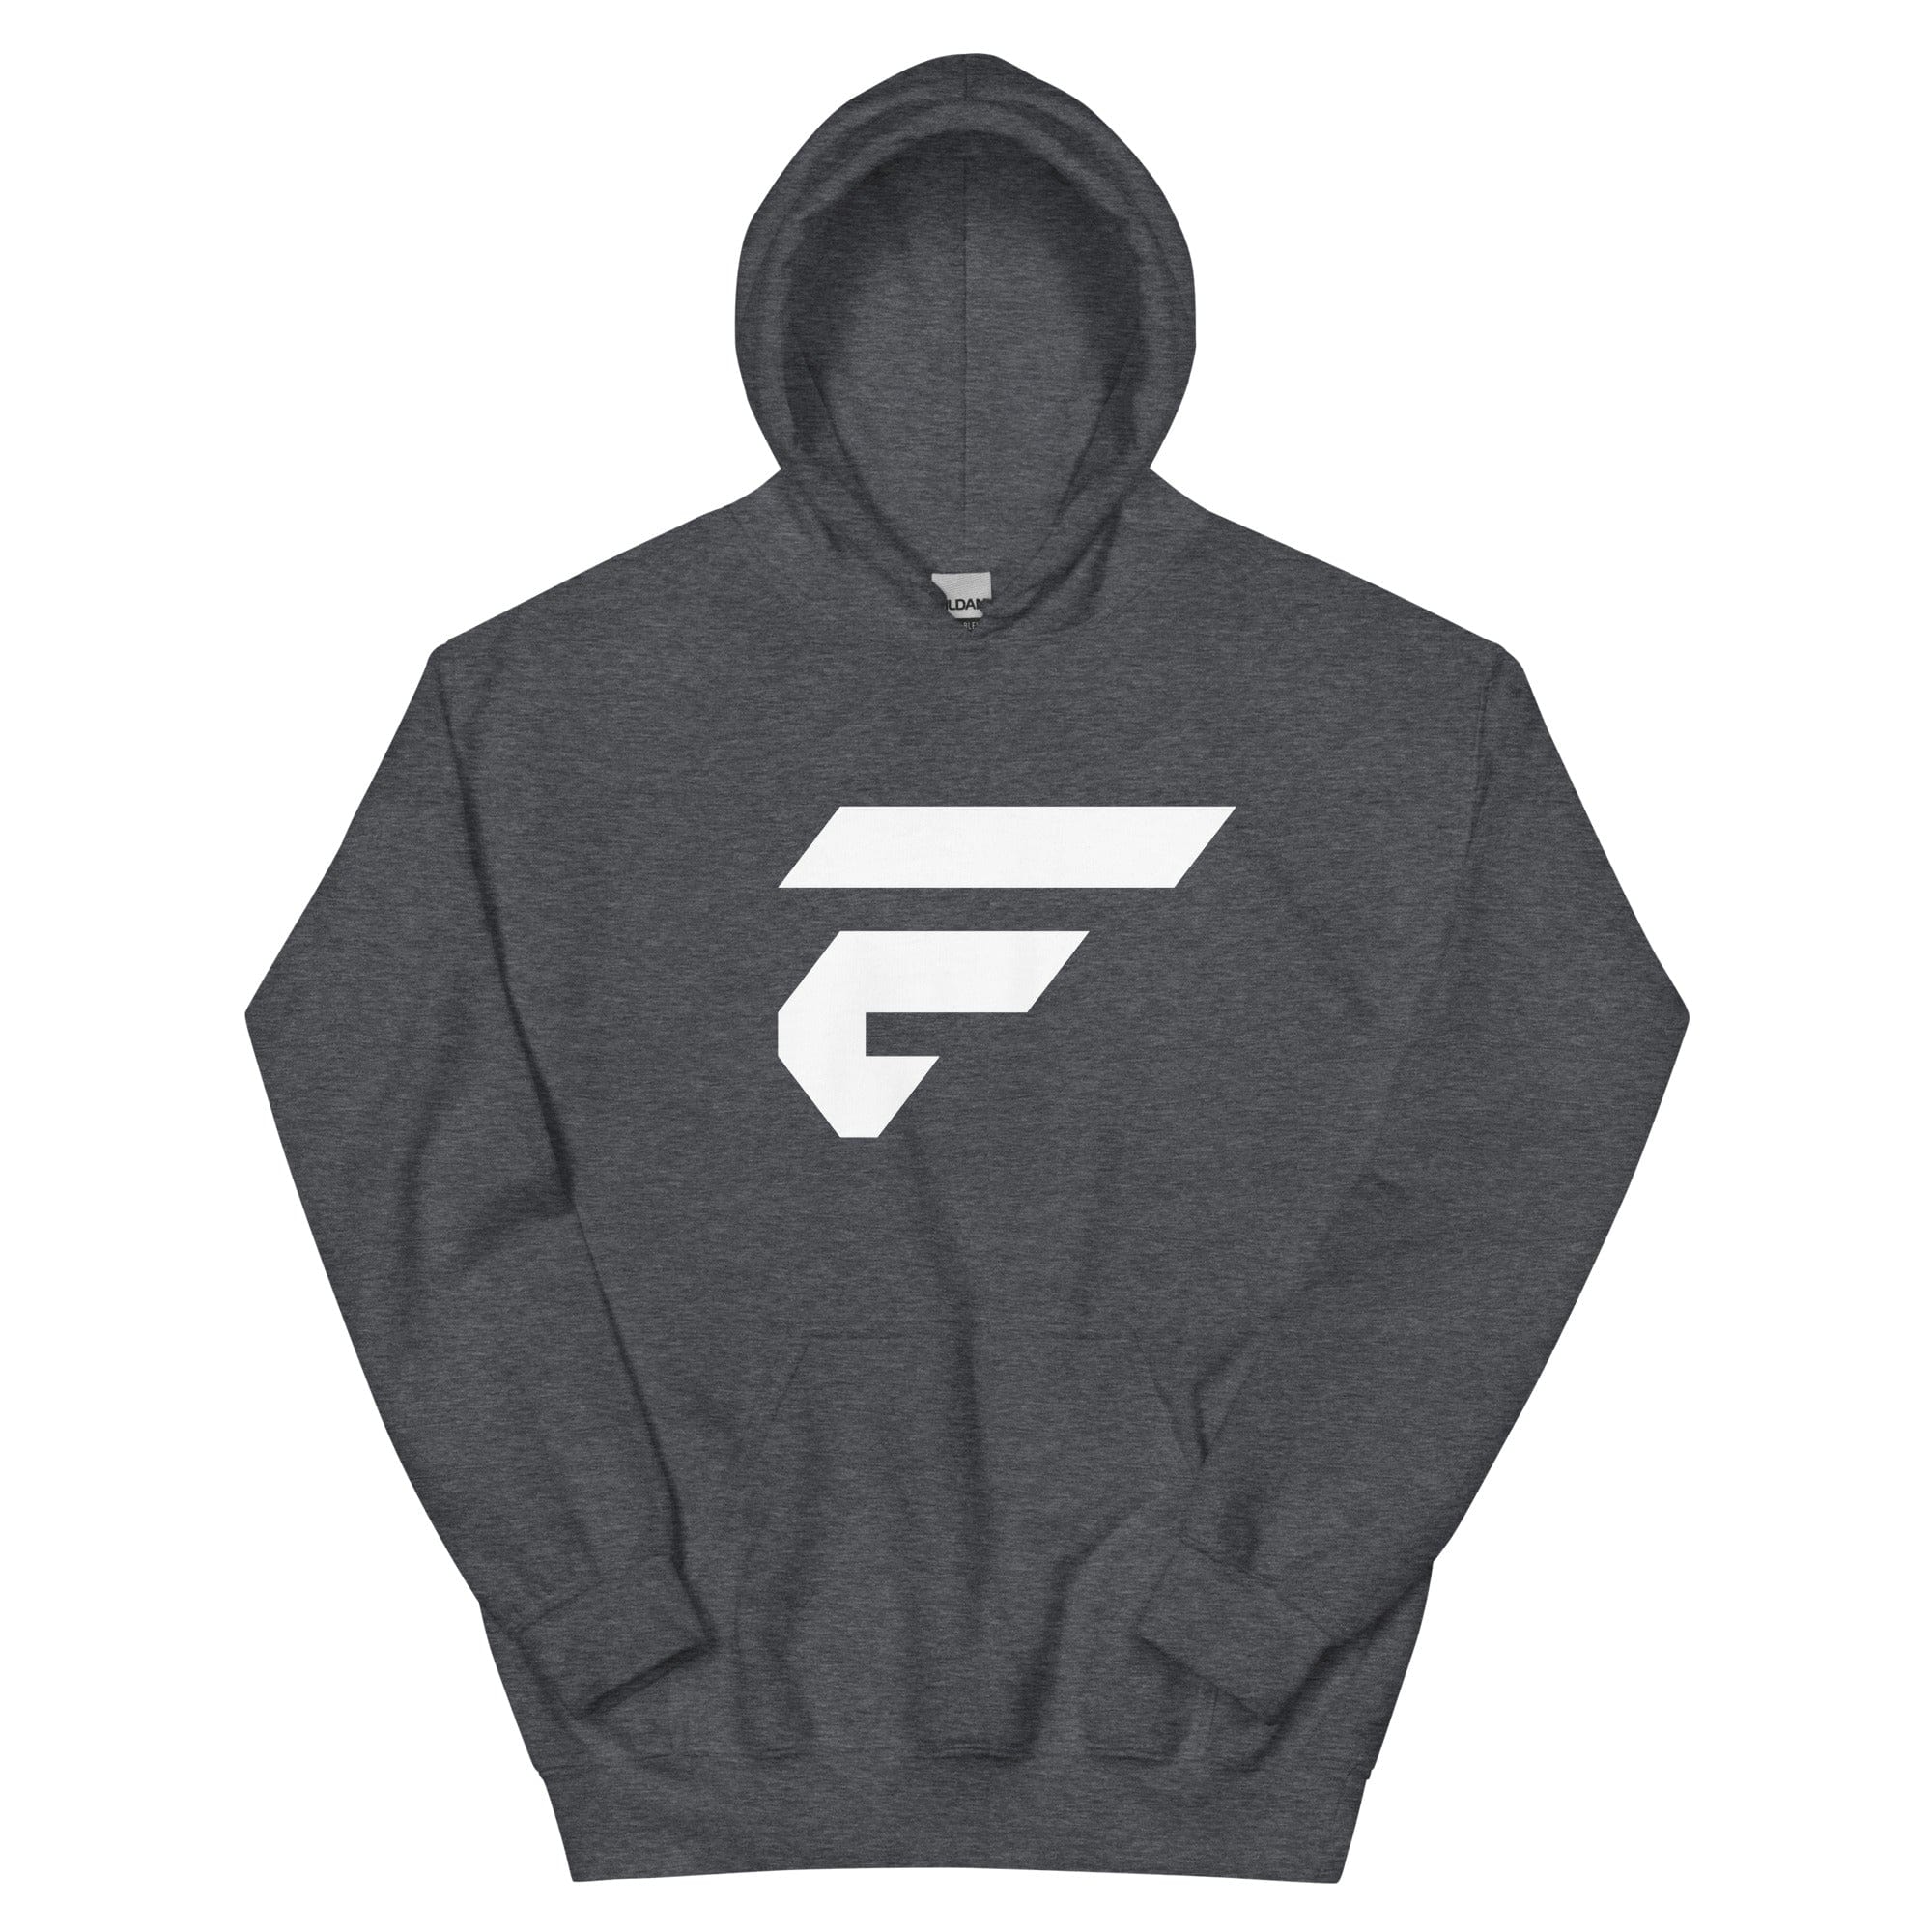 Dark grey unisex cotton hoodie with Fire Cornhole F logo in white